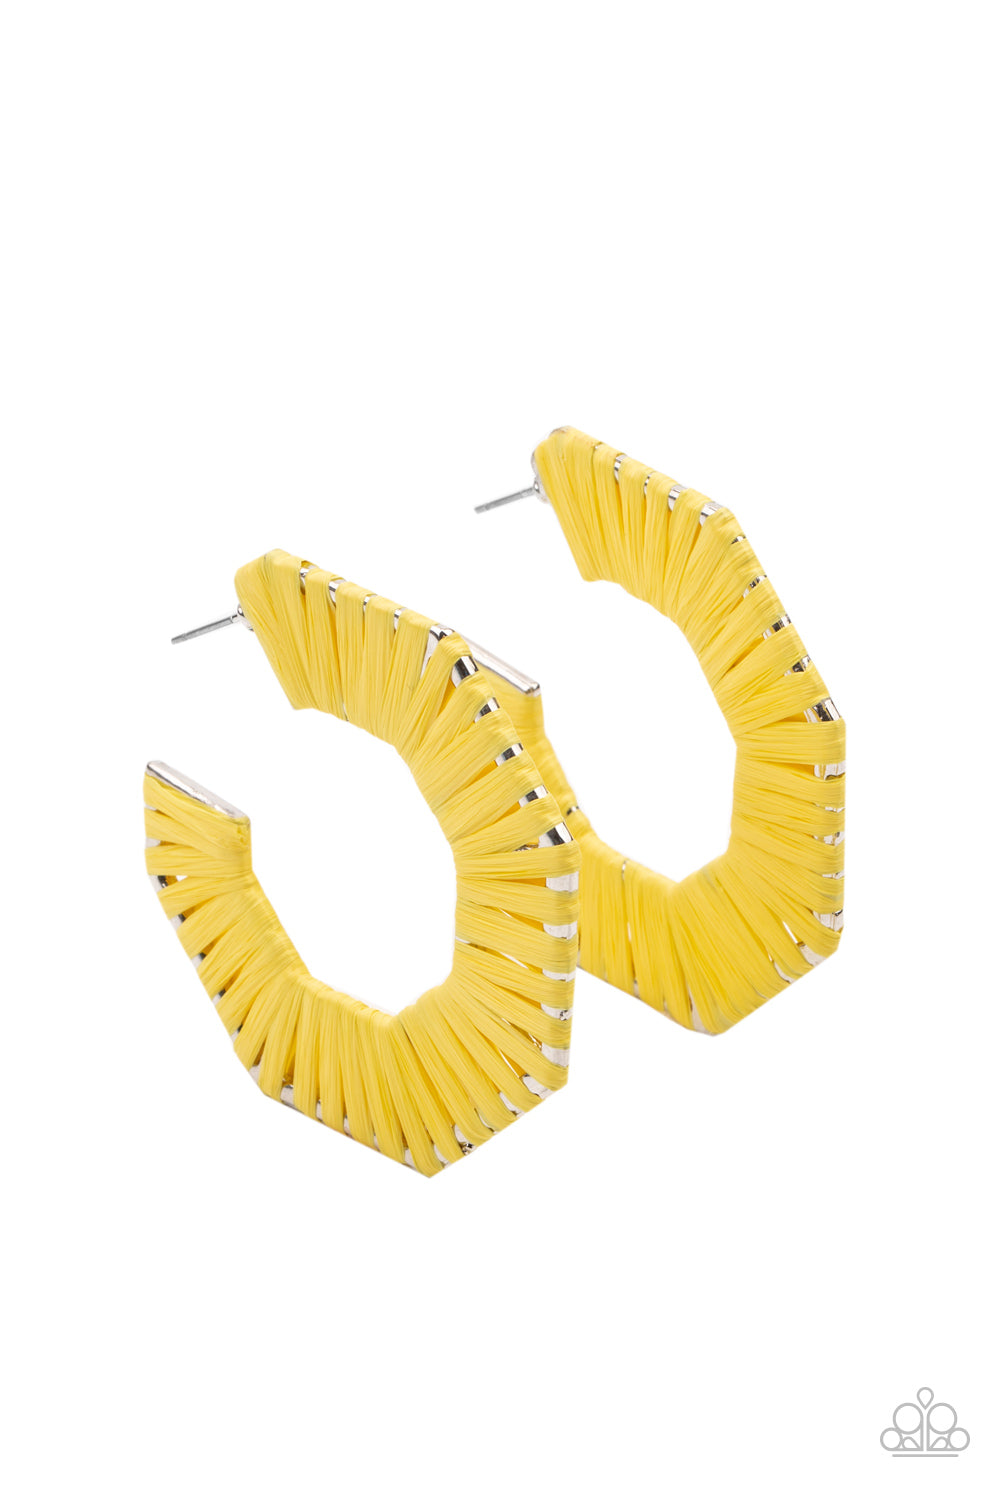 Fabulously Fiesta - Yellow Hoop Earrings - Princess Glam Shop